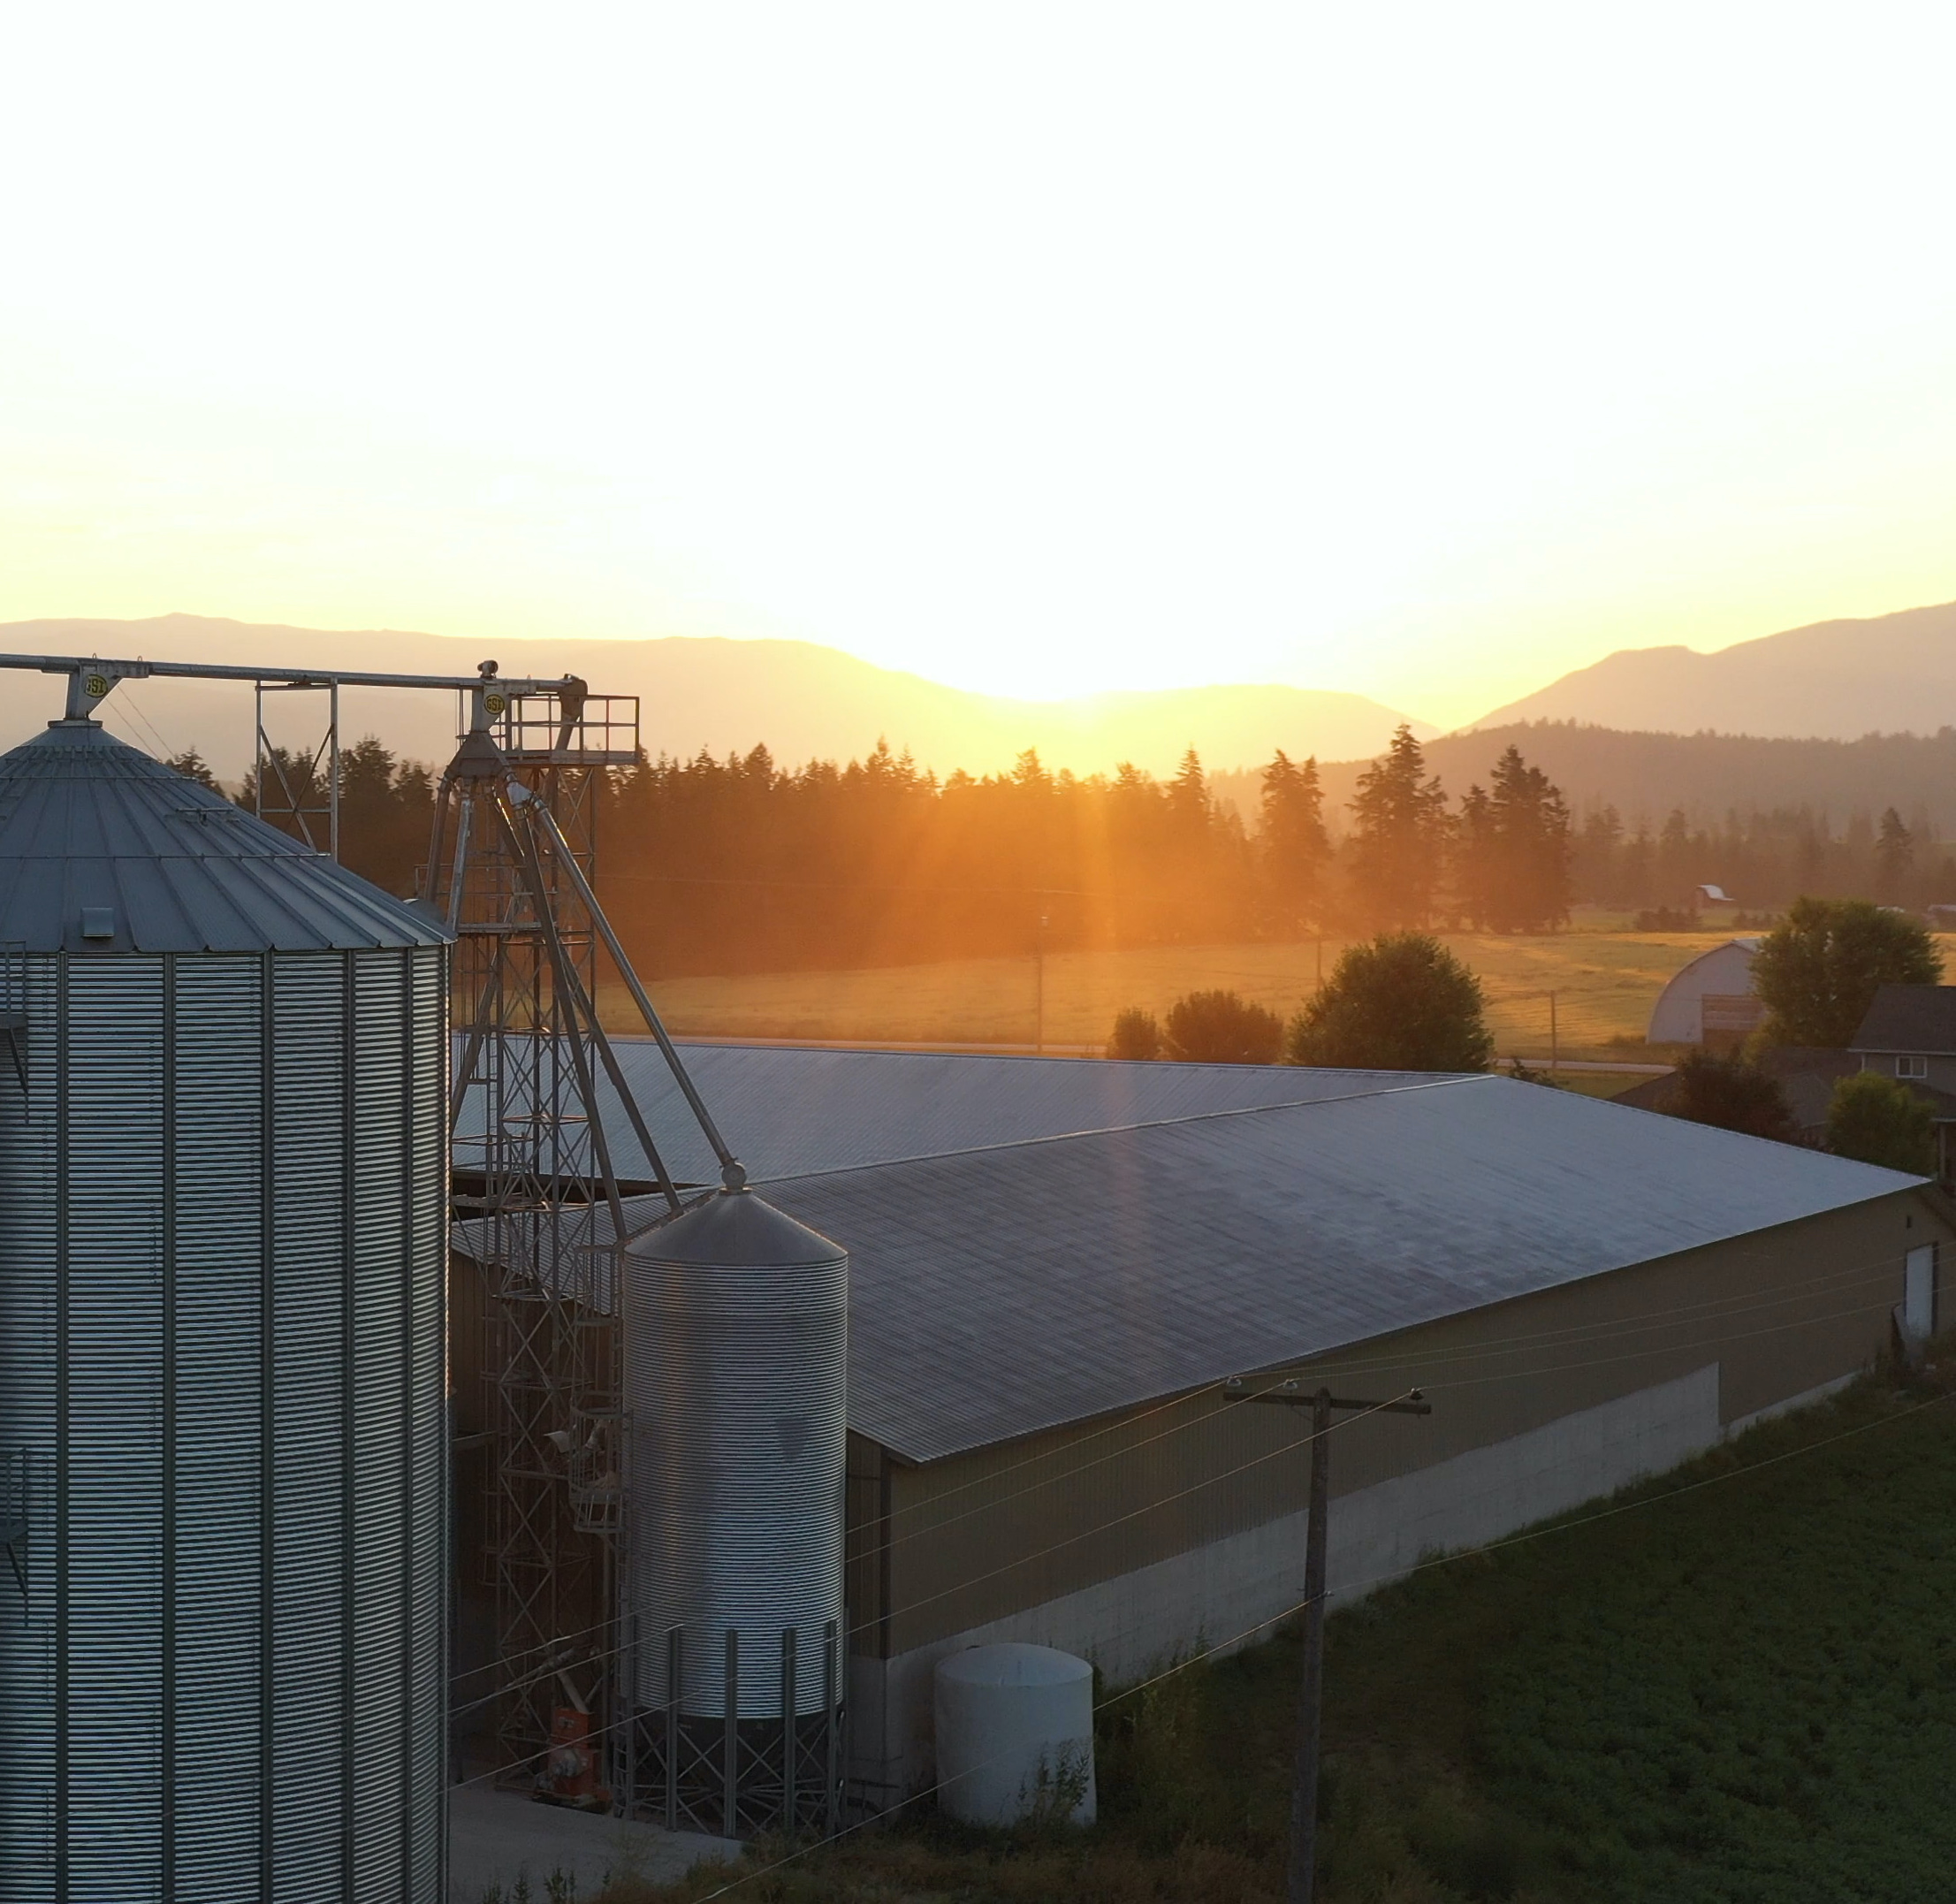 Dairy barn and grain silo at sunrise